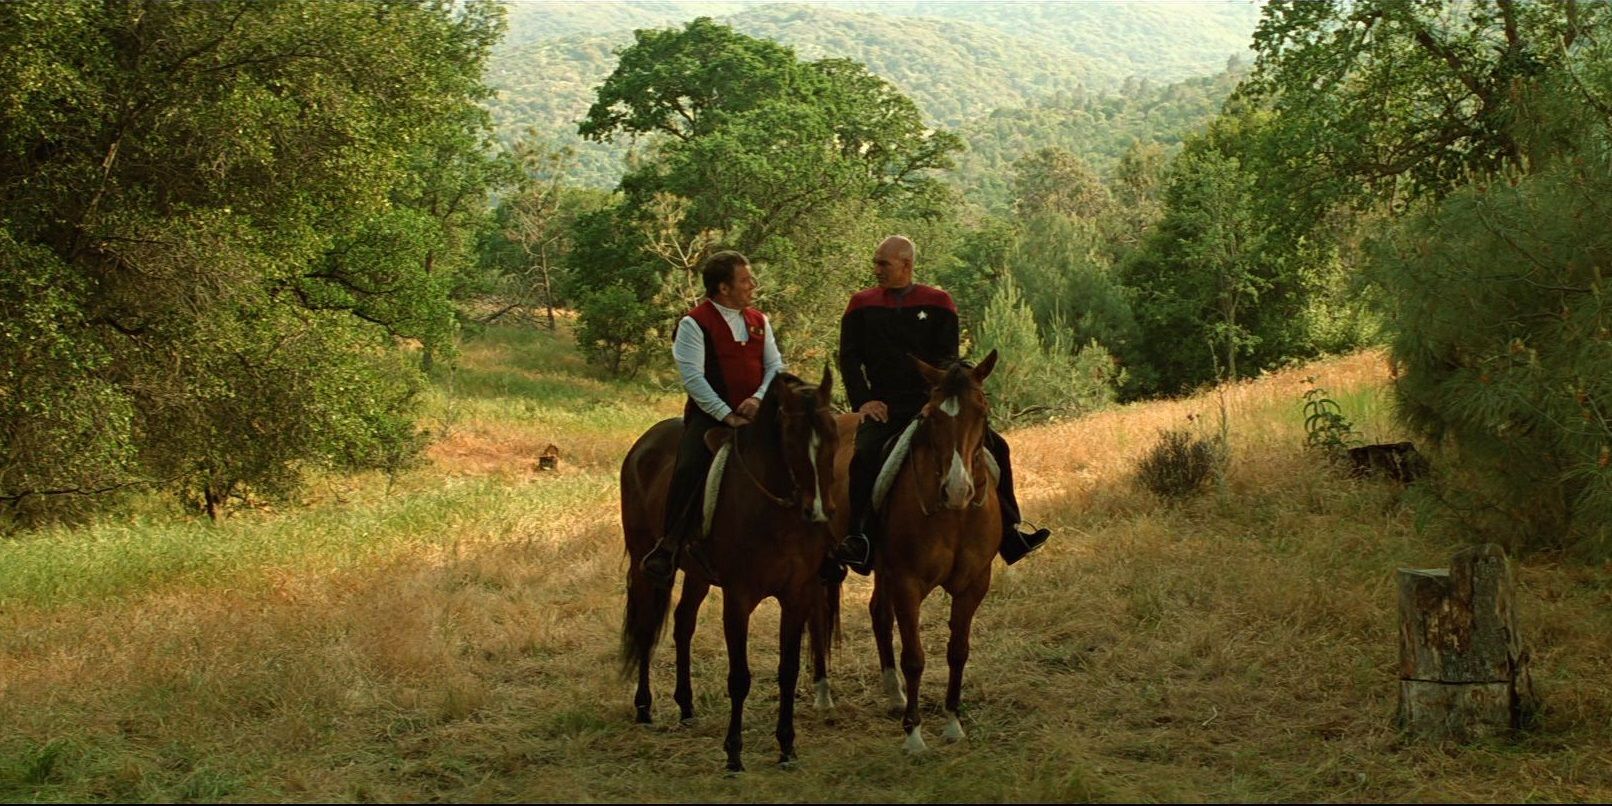 Star Trek Generations. William Shatner as Captain James T. Kirk and Patrick Stewart as Captain Jean-Luc Picard. On horseback in Nexus.